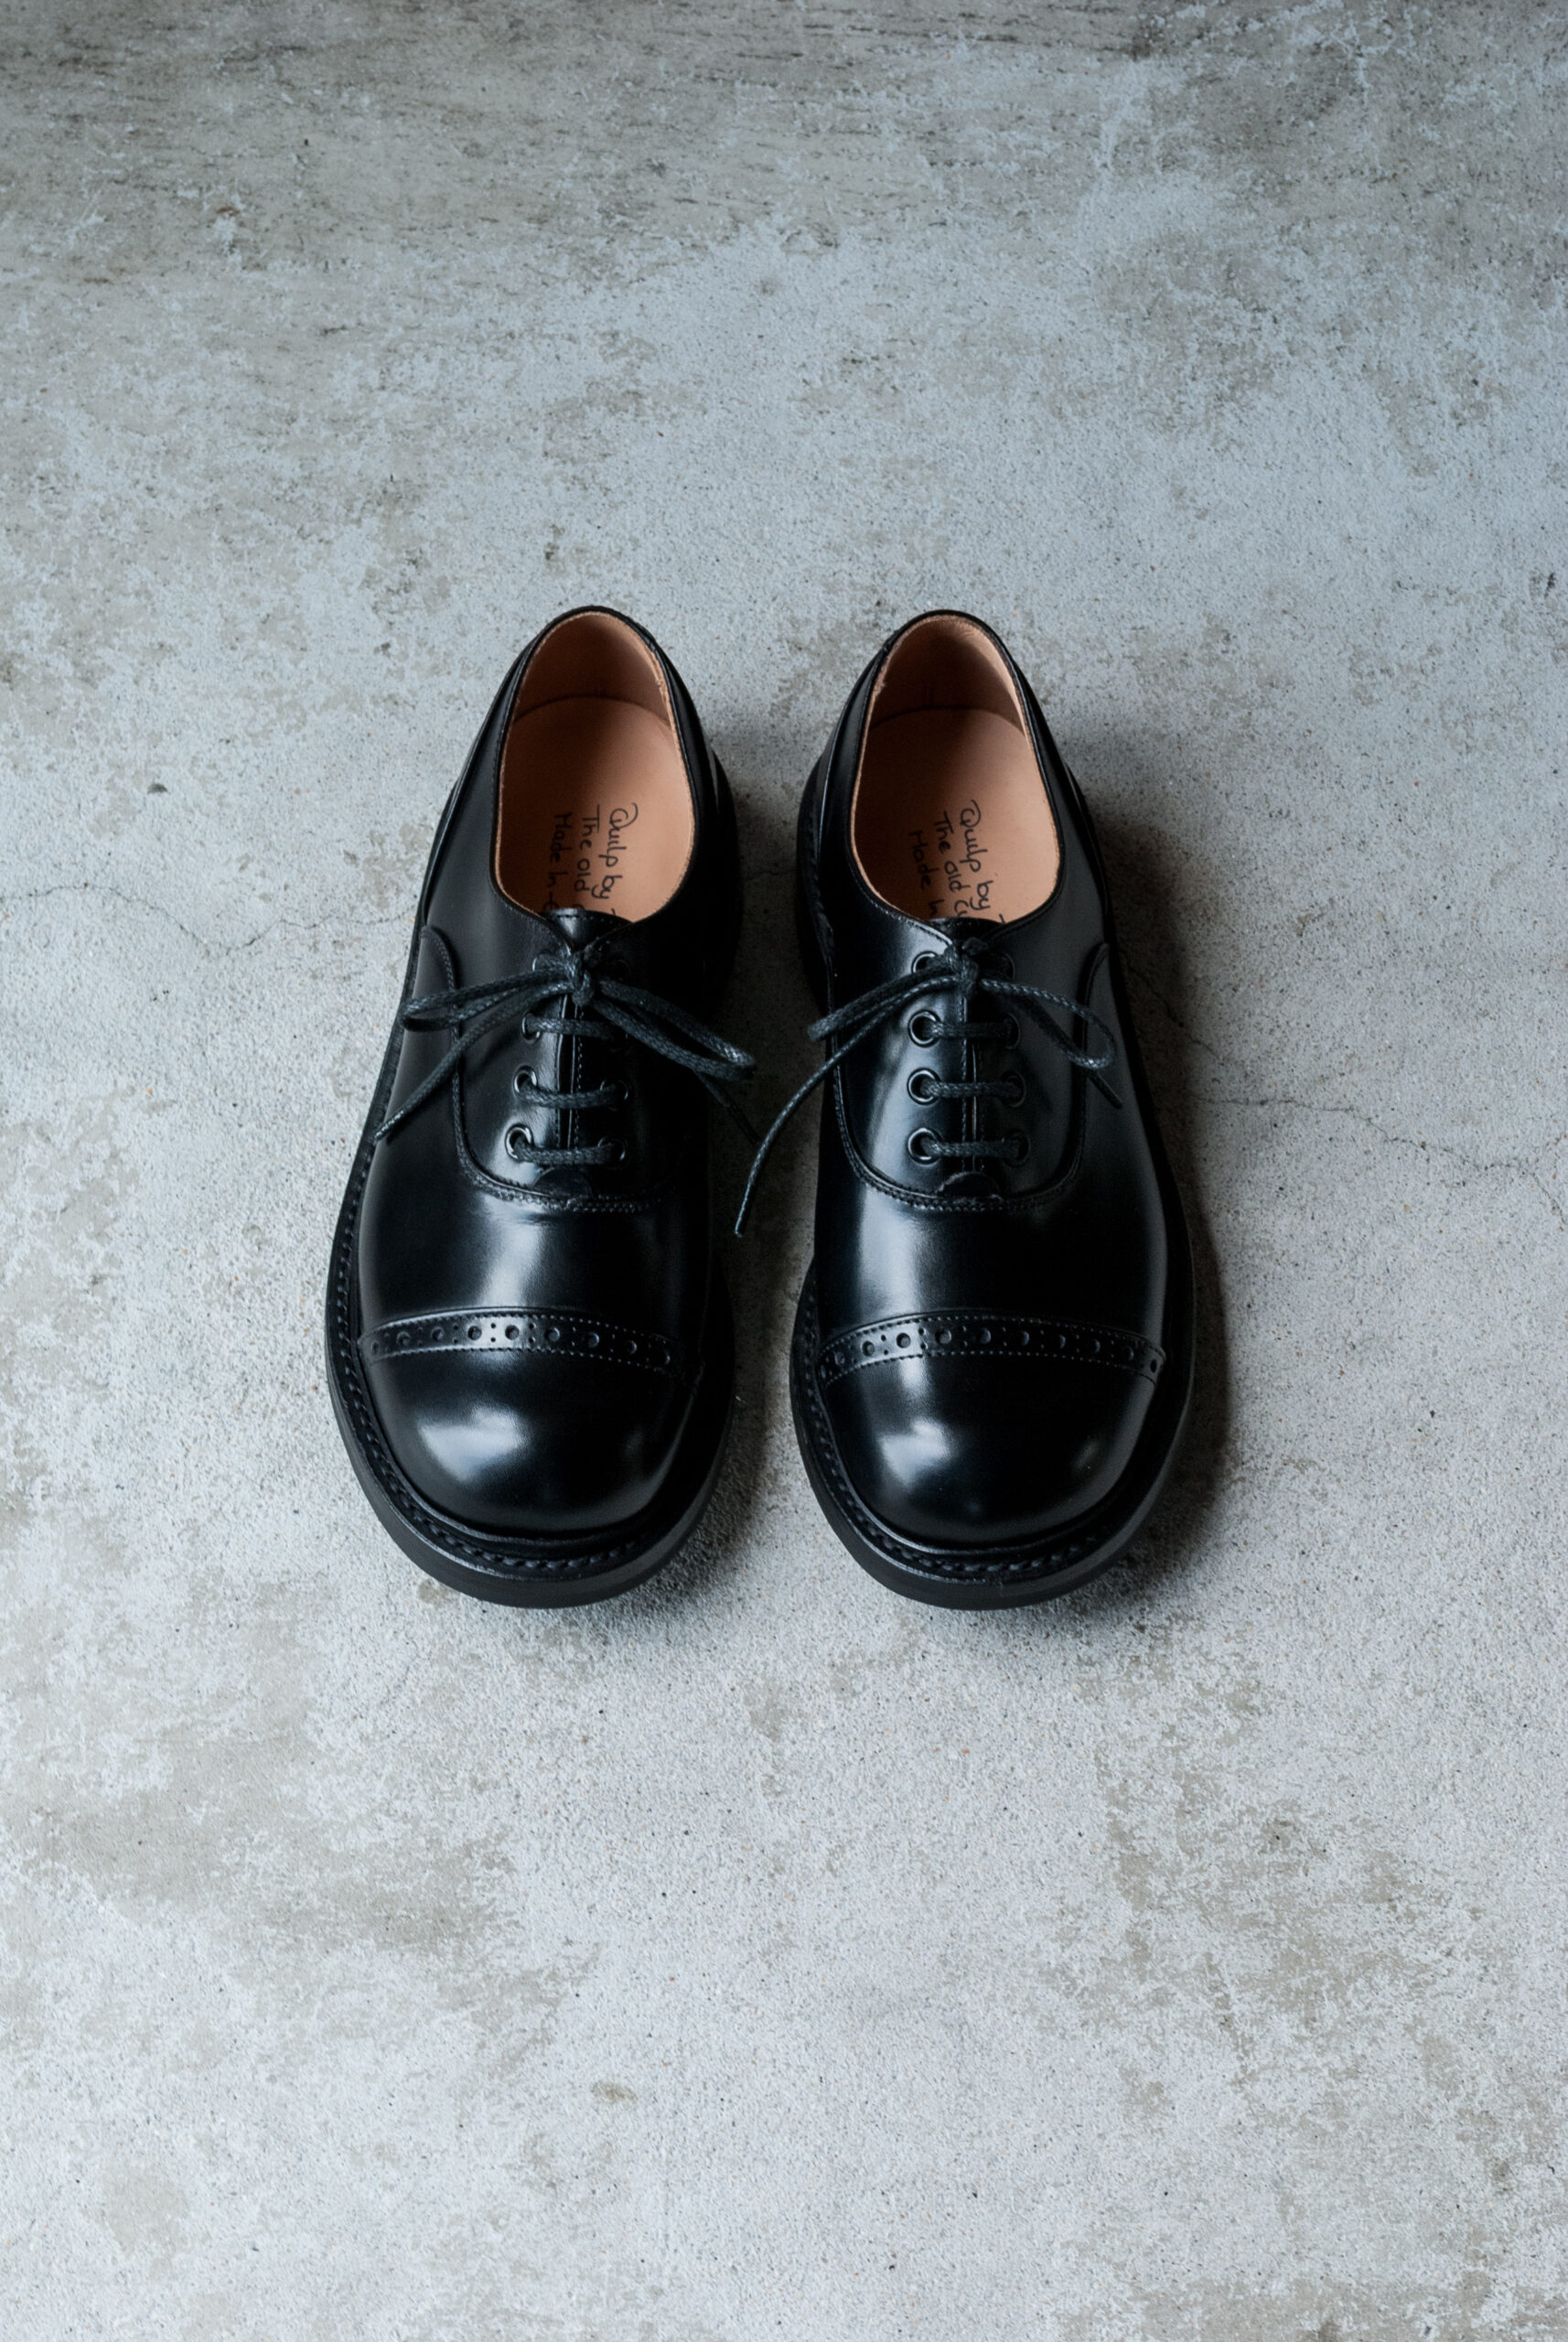 QUILP by Trickers M7401 Oxford Shoe Black Box Calf | kado〔カド 